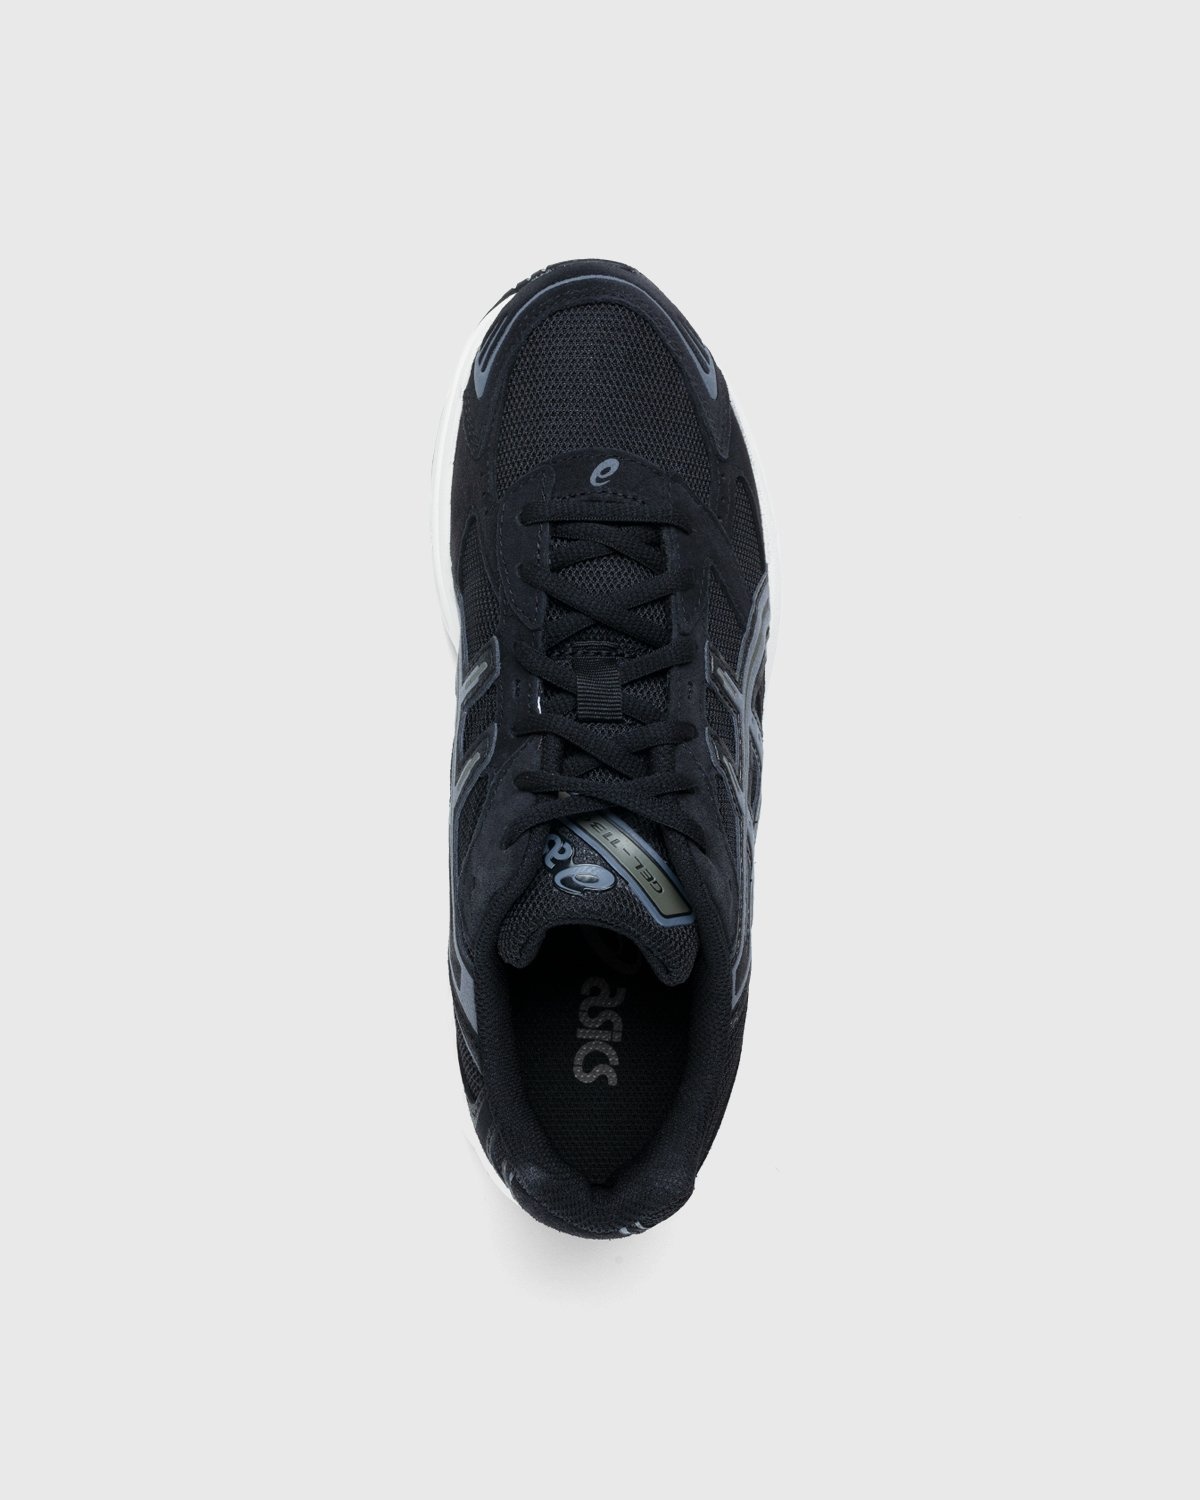 asics – Gel-1130 Black/Metropolis - Low Top Sneakers - Black - Image 5